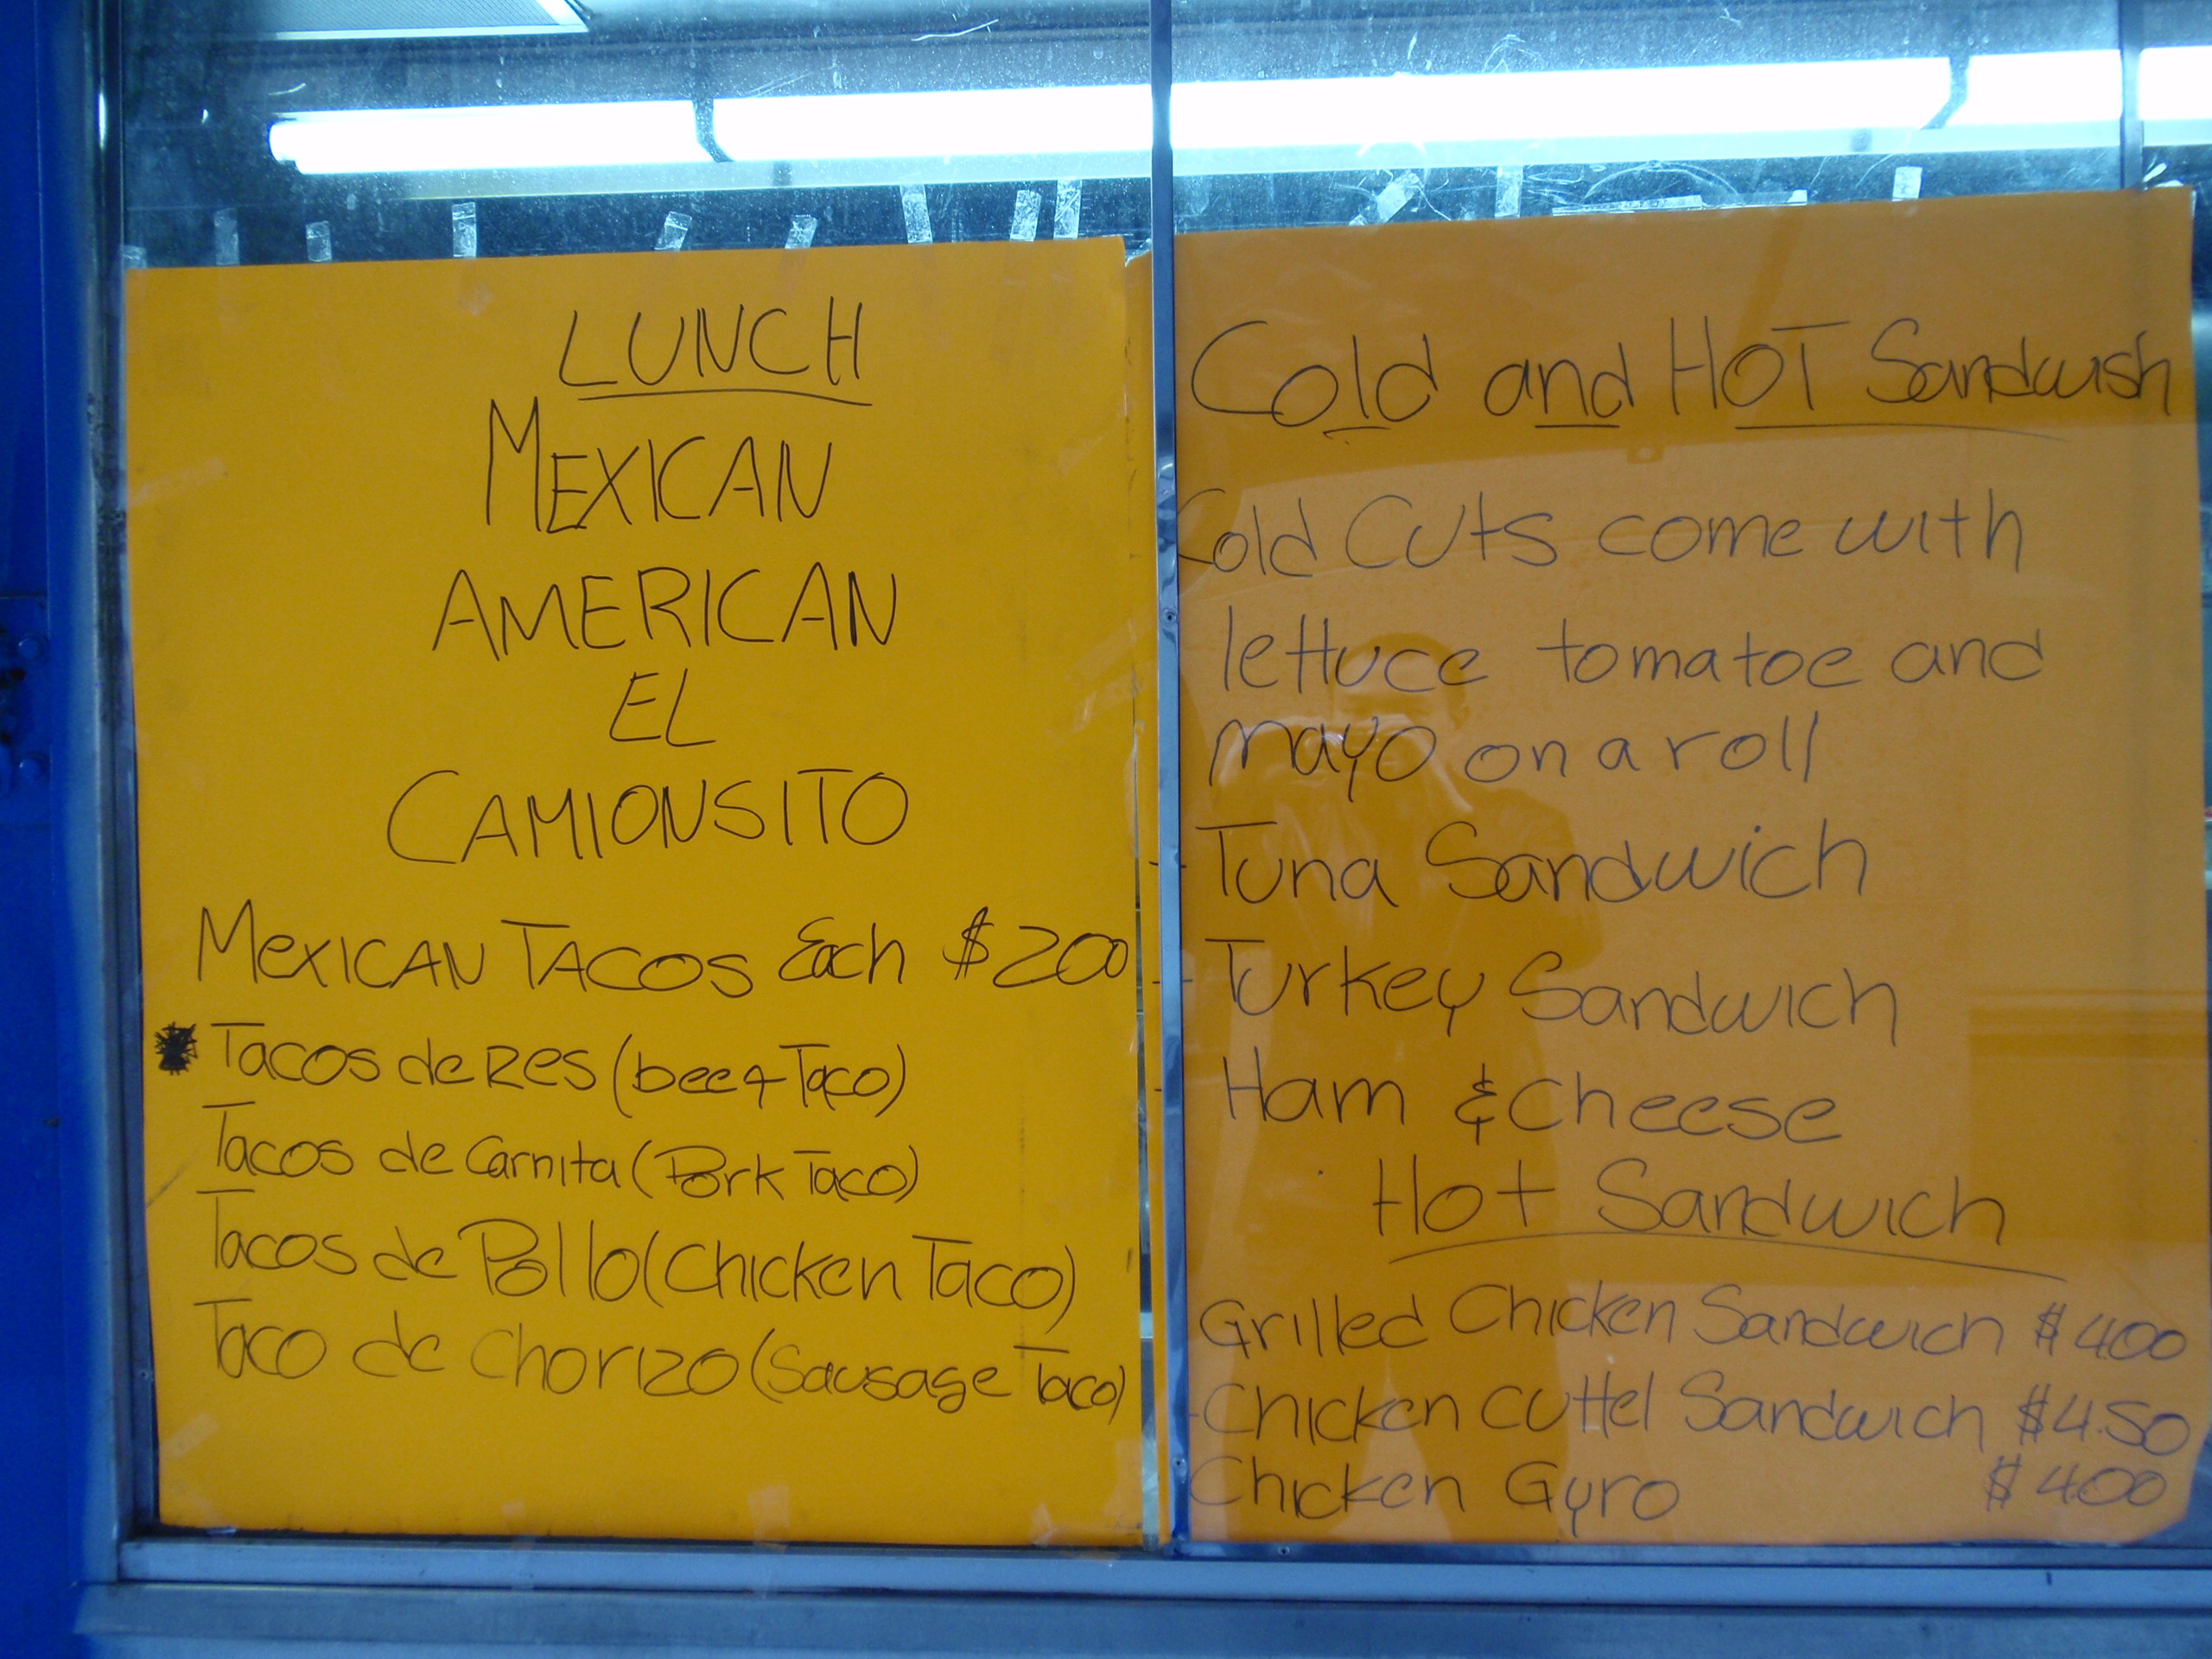 The menu at El Camioncito Taco Truck, courtesy of nomnomnyc.